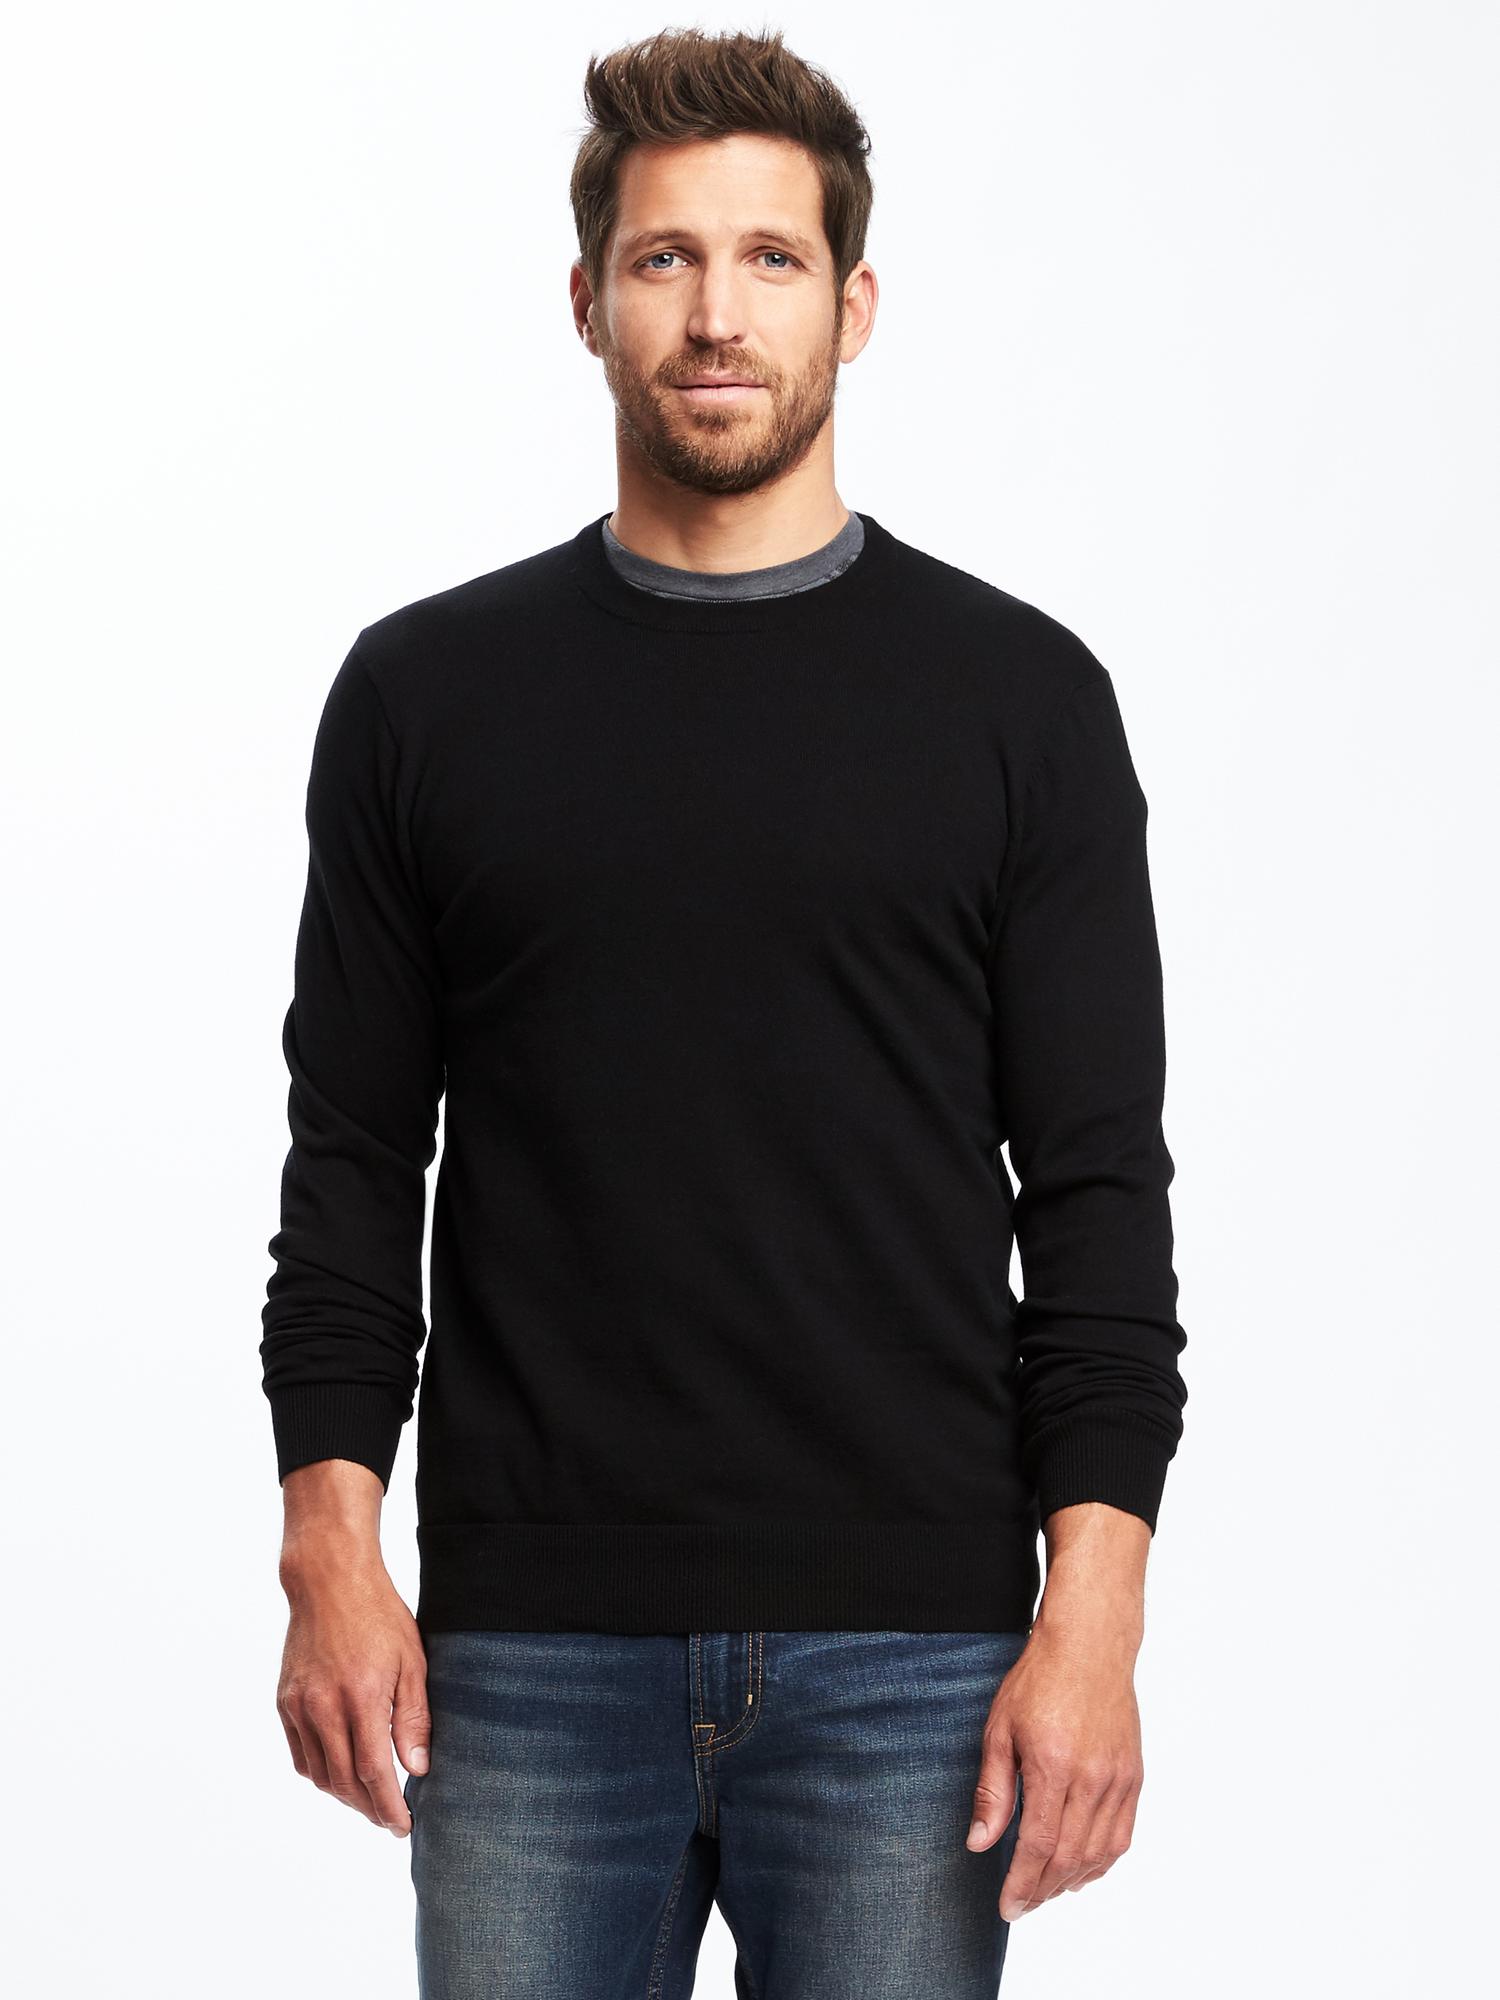 Crew-Neck Sweater for Men | Old Navy